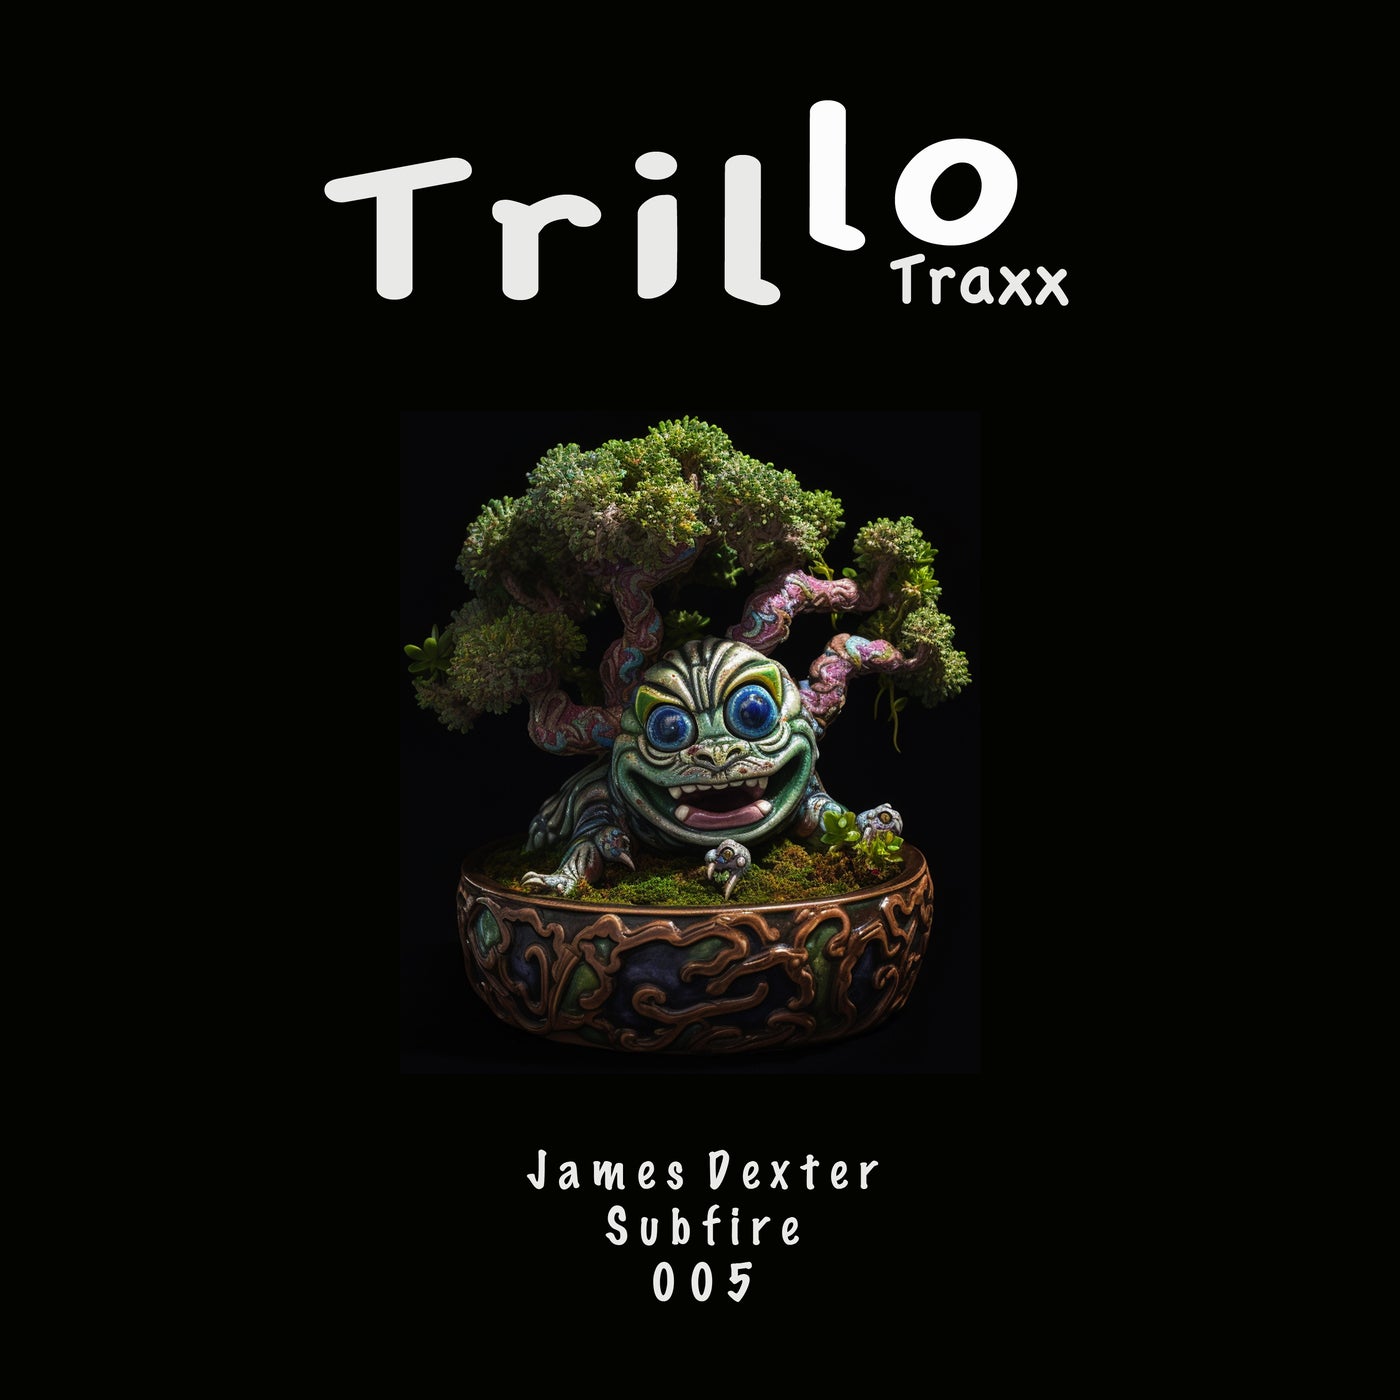 image cover: James Dexter - Subfire on Trillo Traxx